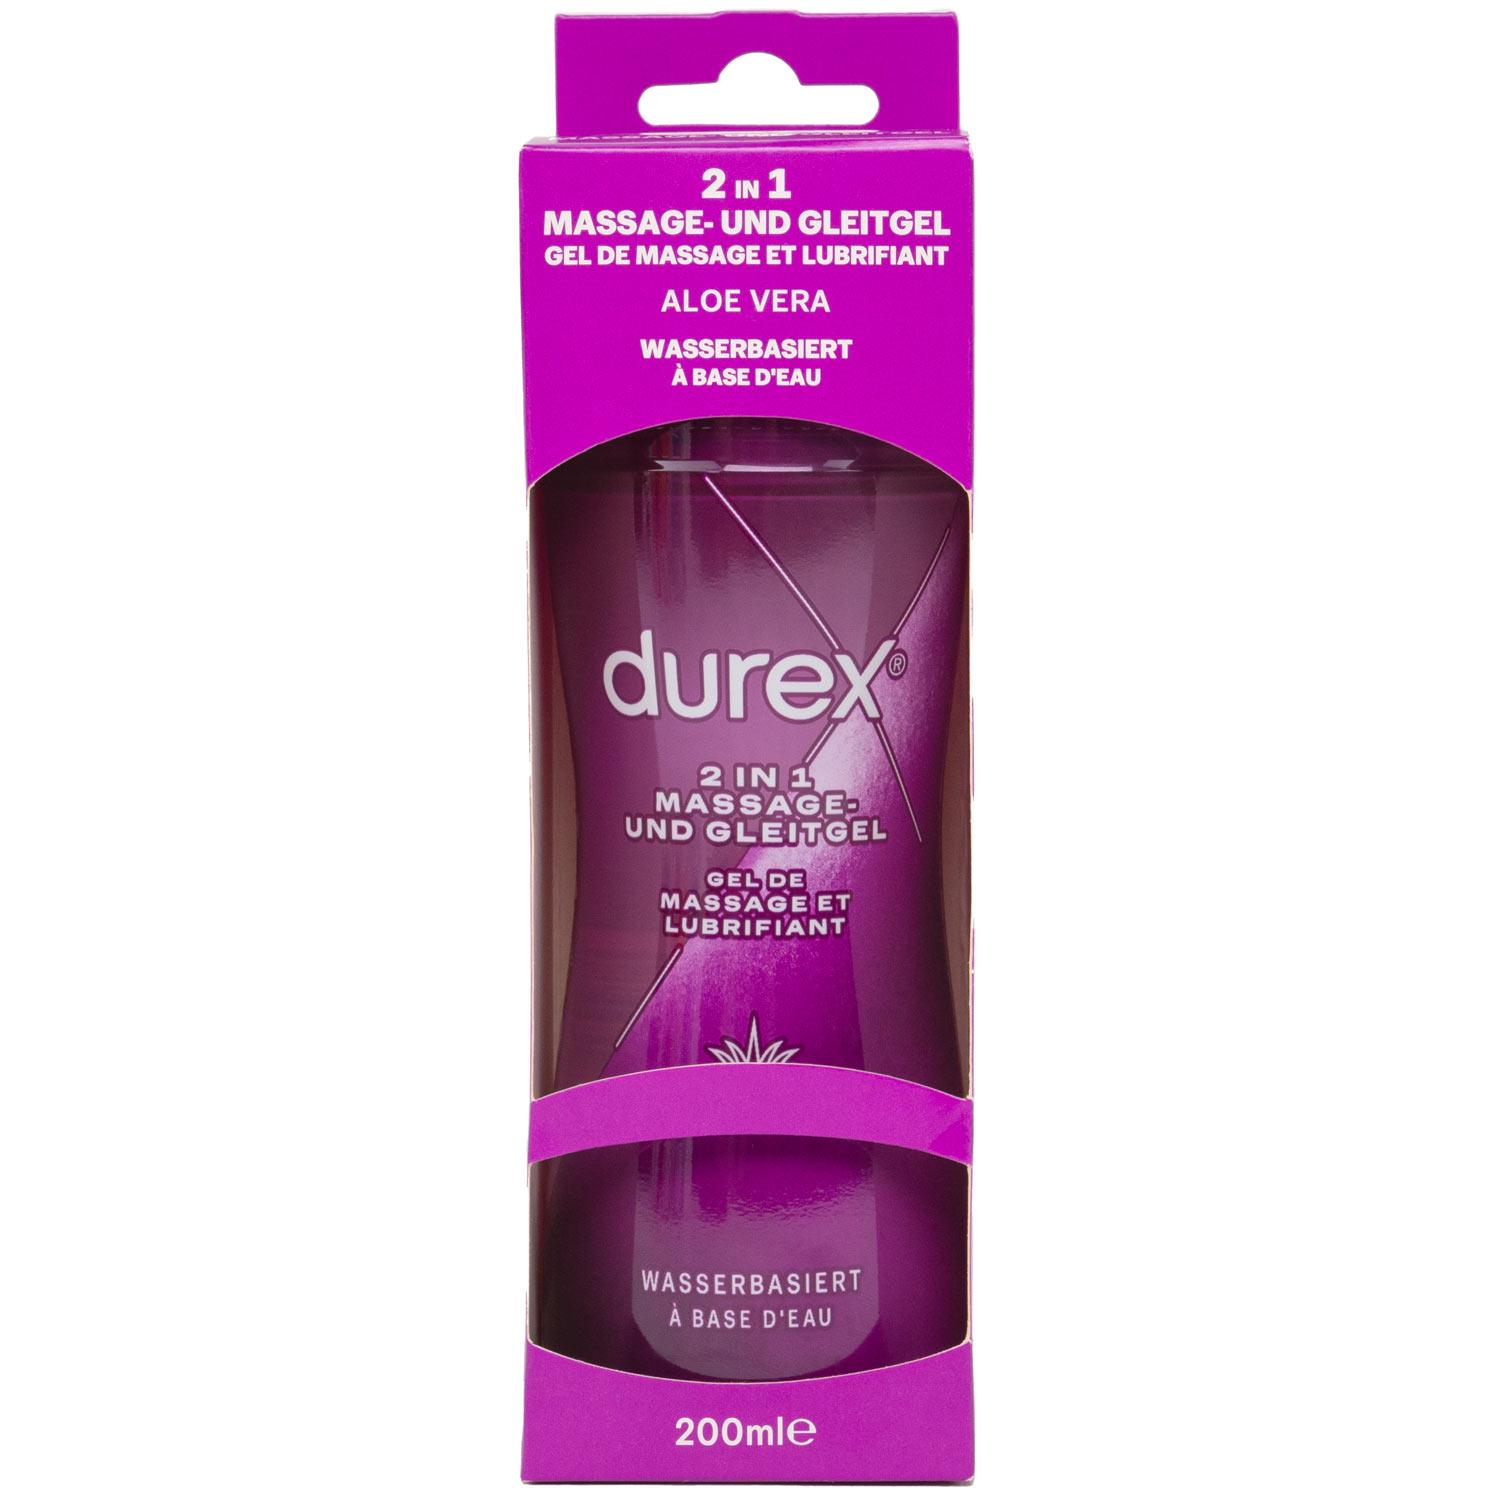 Durex 2 in 1, Massage & Lubricant with Aloe Vera, Water Based, 200 ml